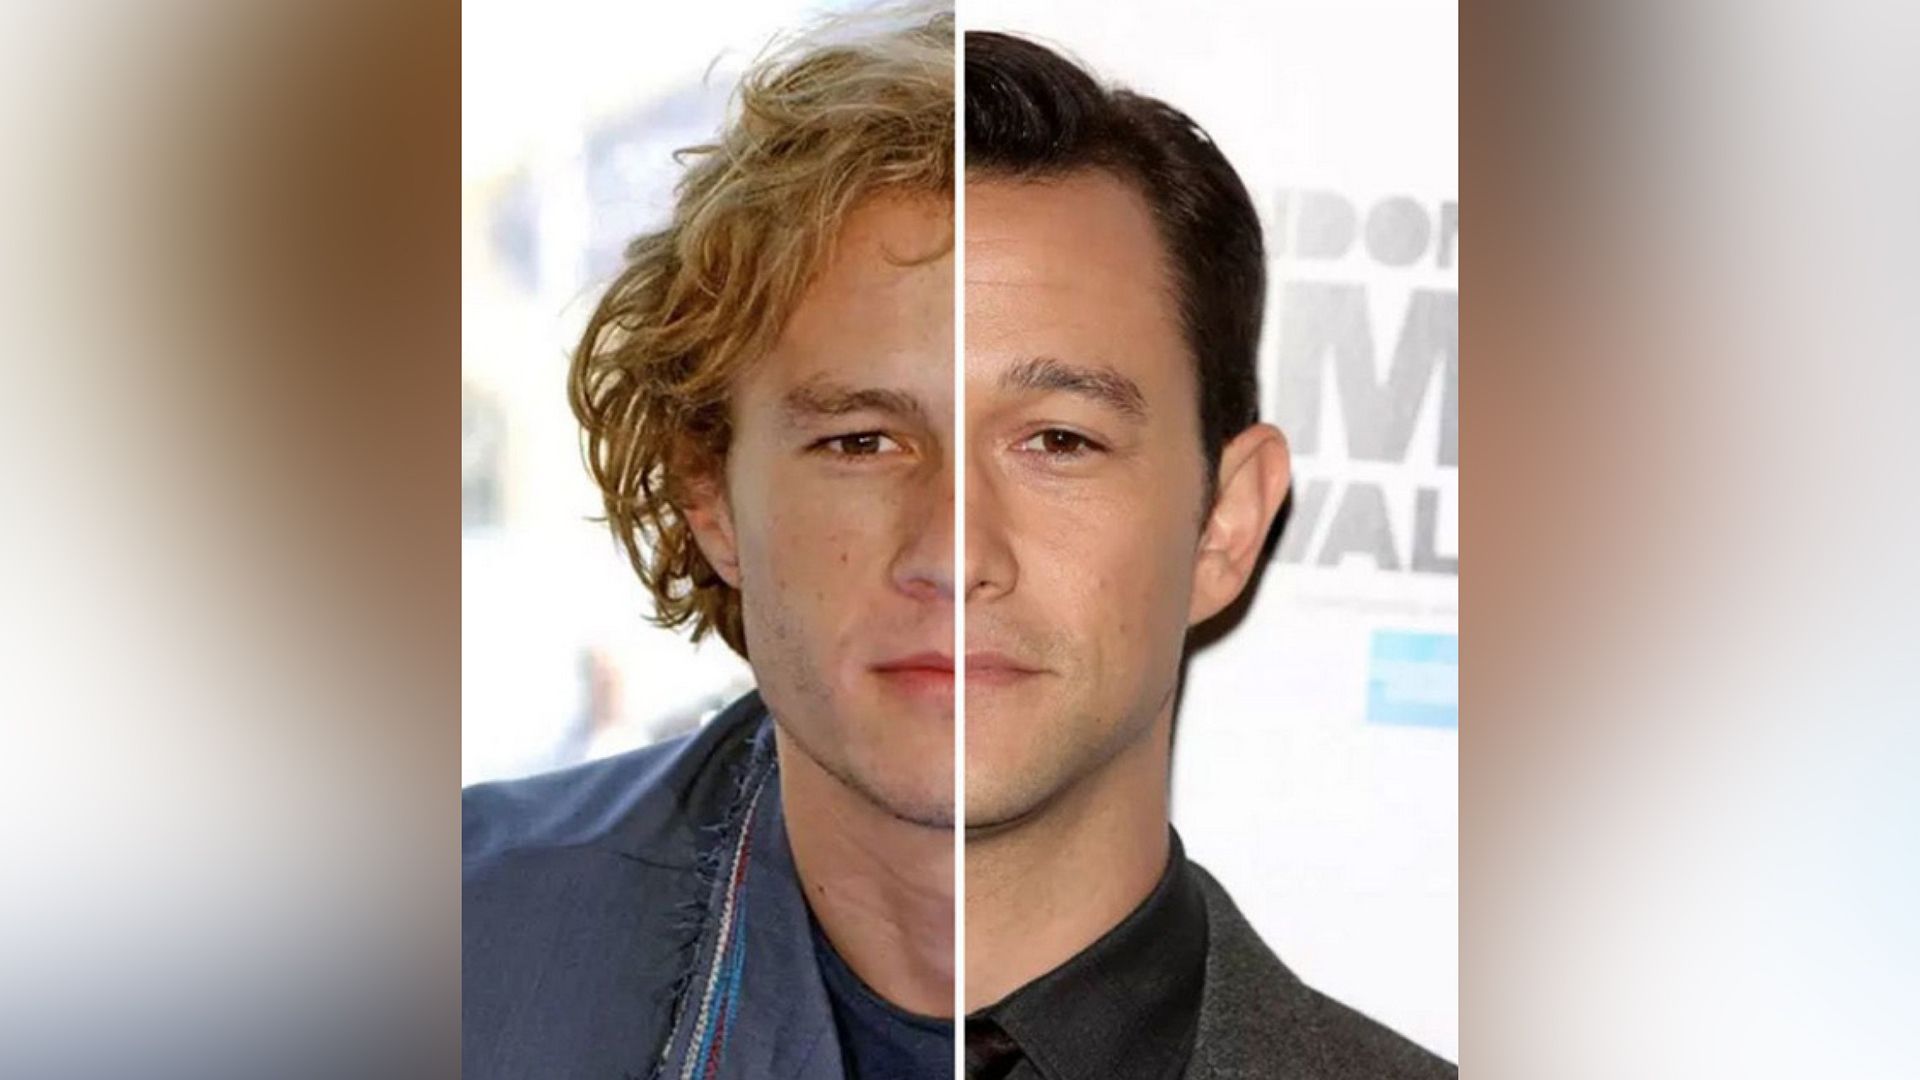 Joseph Gordon-Levitt and Heath Ledger look quite alike